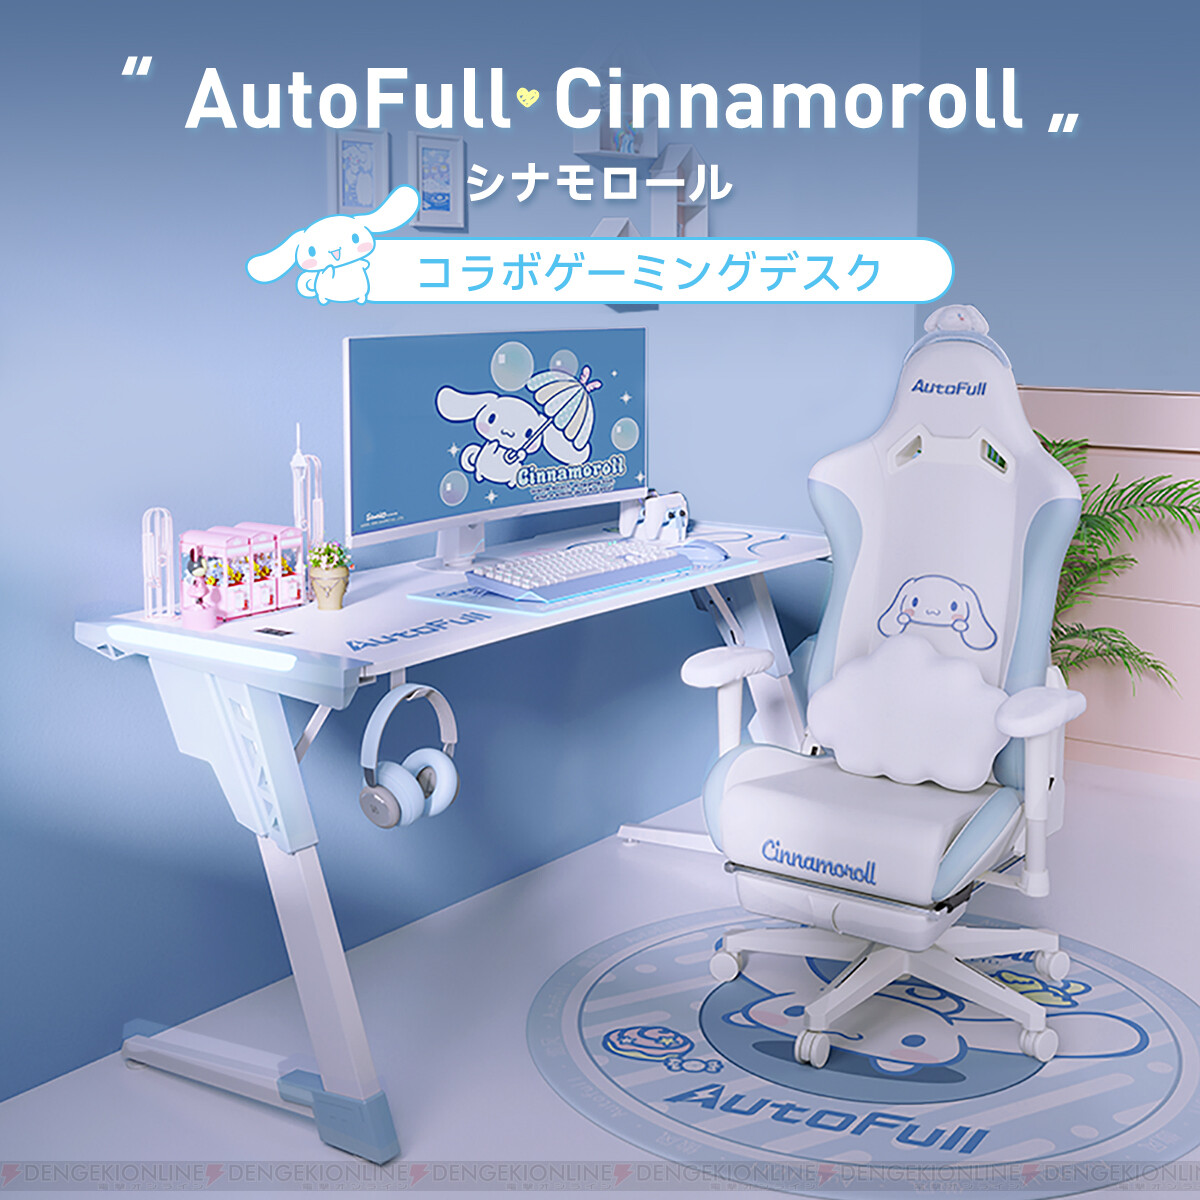 AutoFull シナモロール シナモン ゲーミングチェア - 椅子/チェア